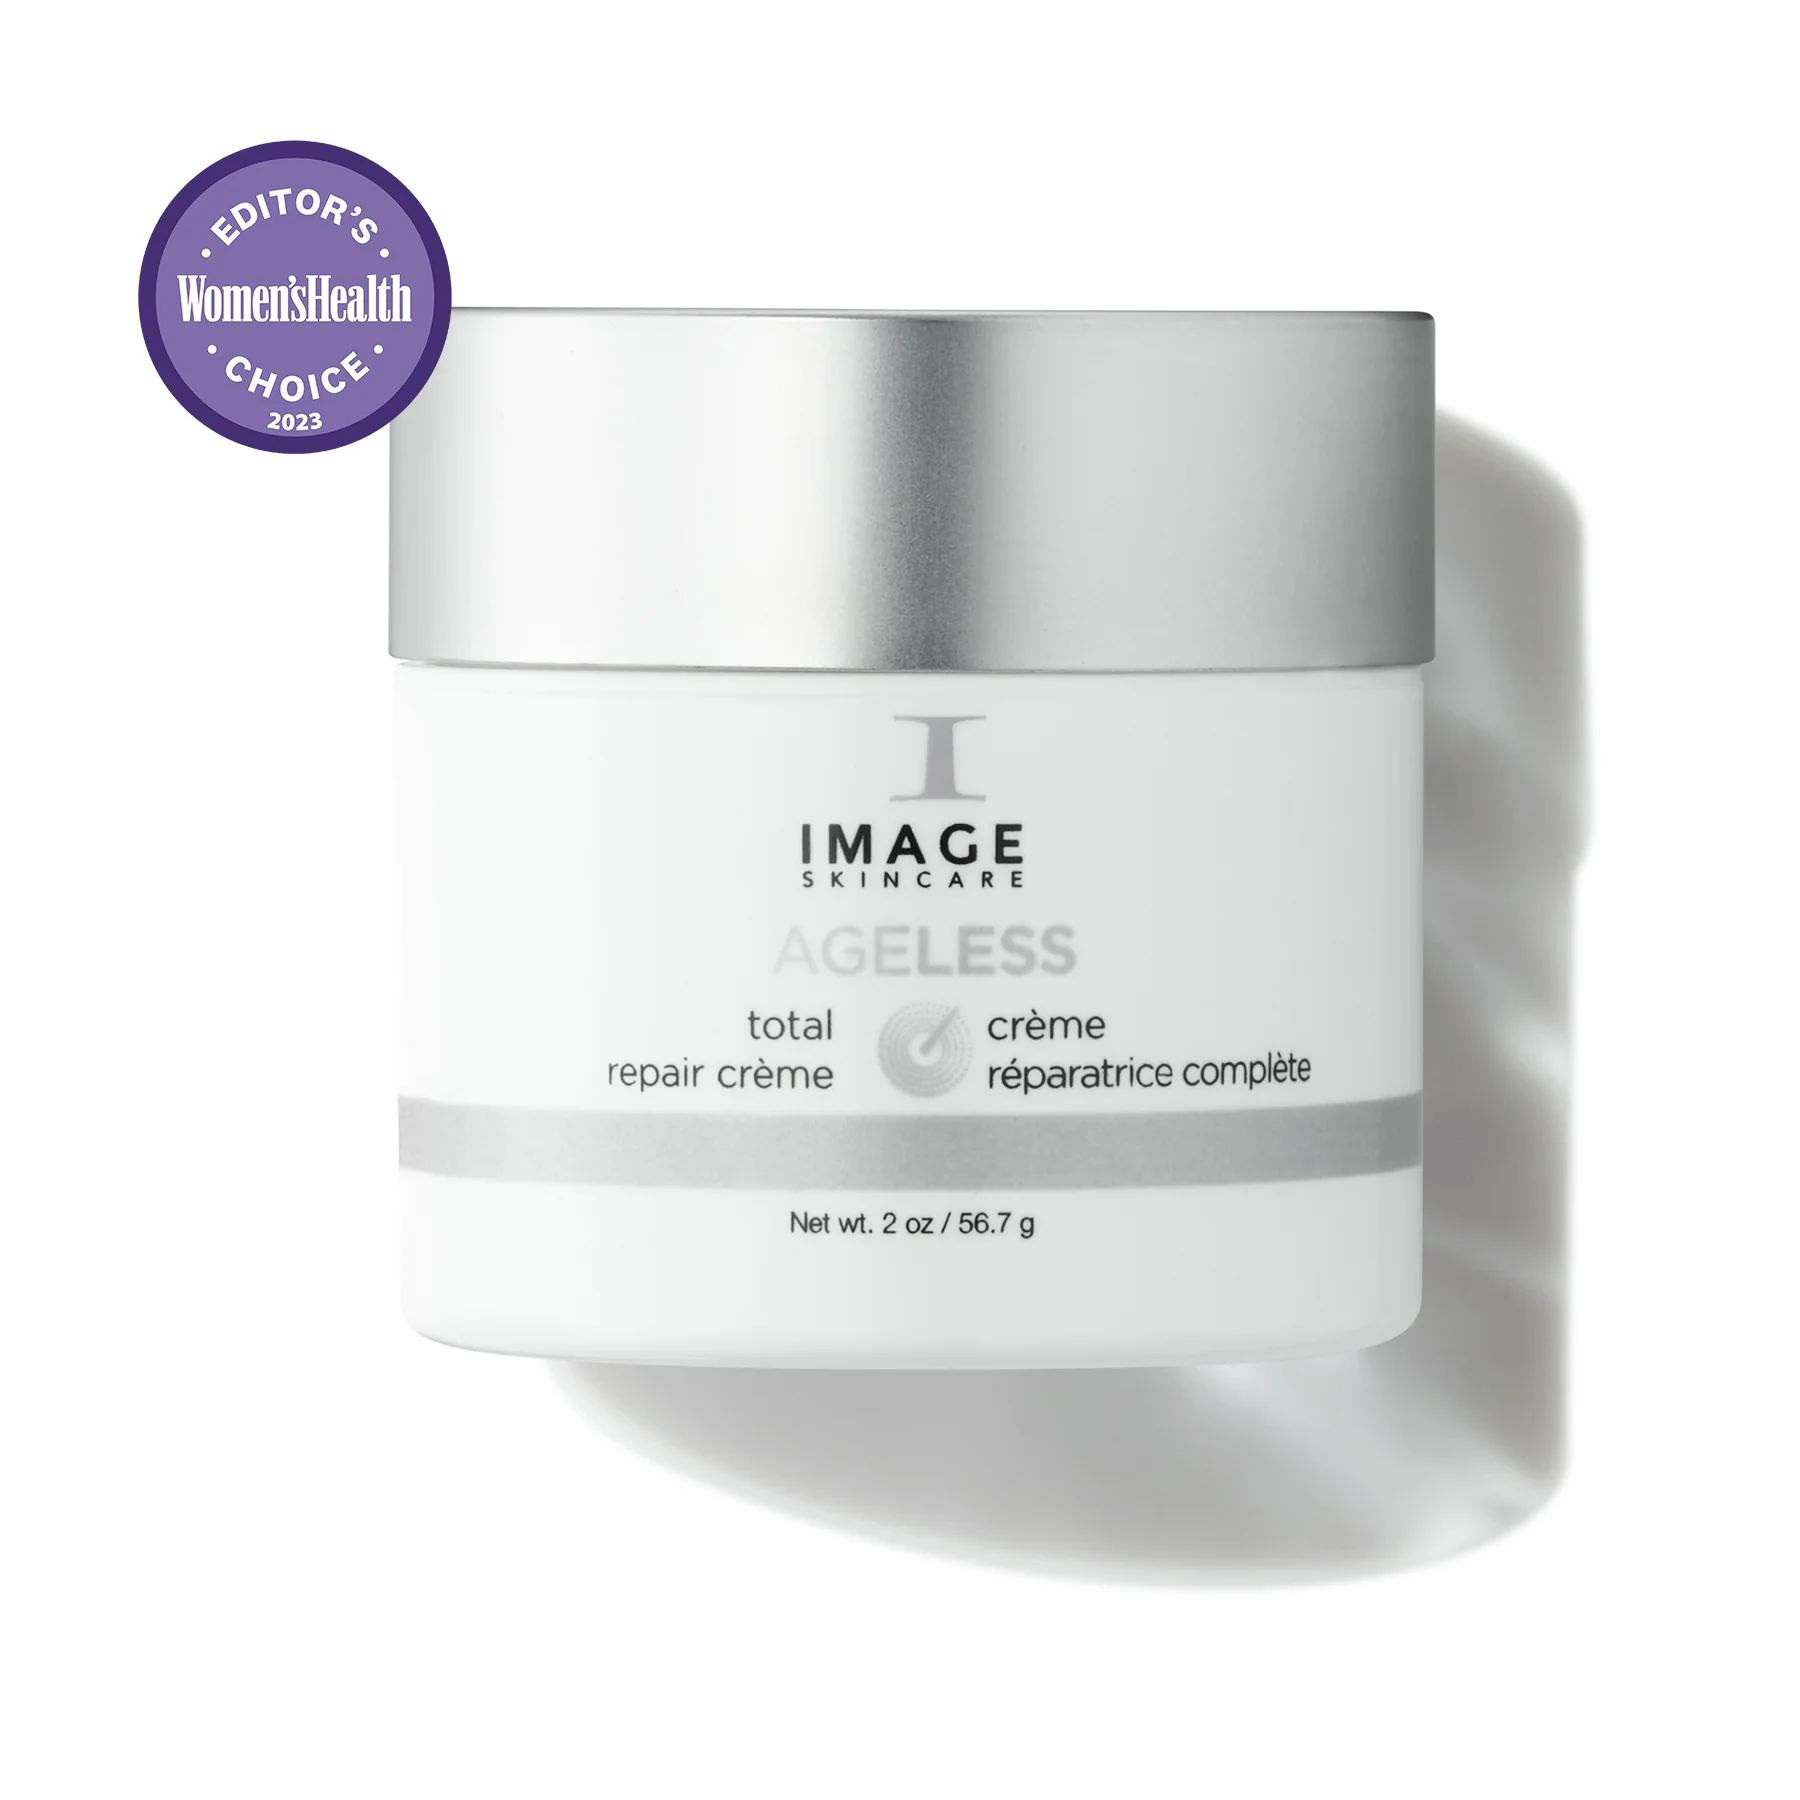 AGELESS total repair crème | Image Skincare